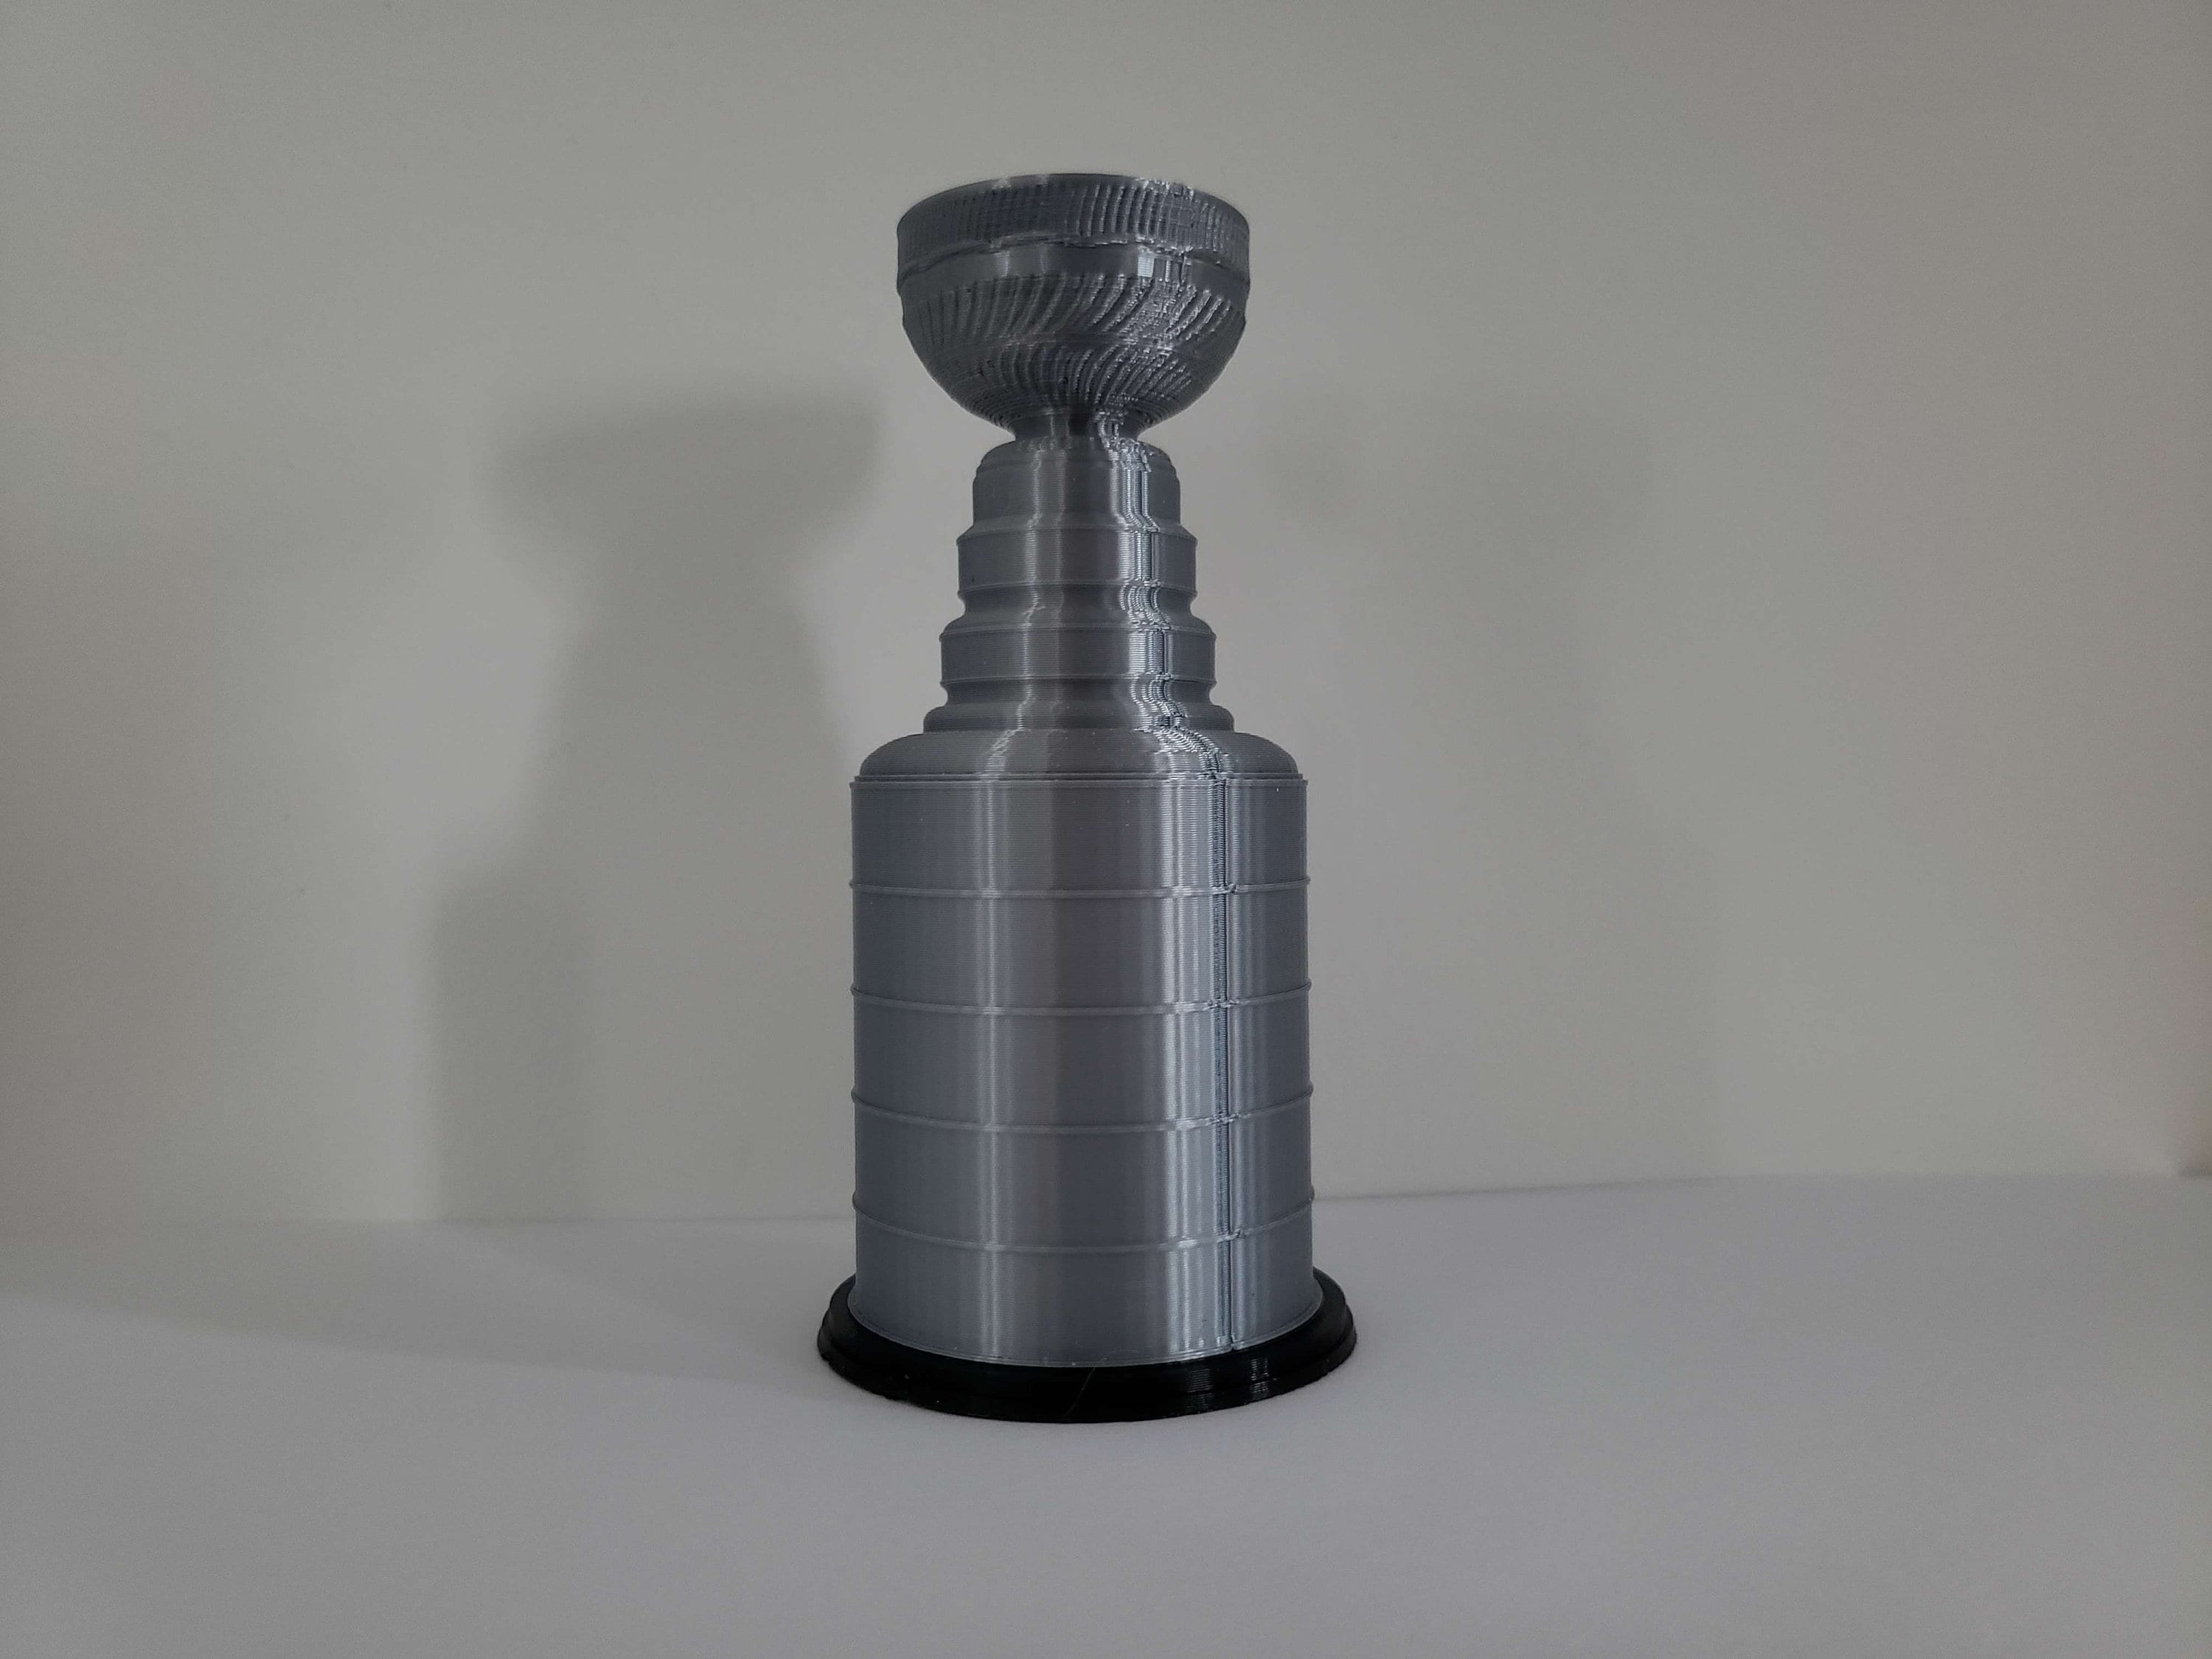 Mini Stanley Cup, Brickipedia